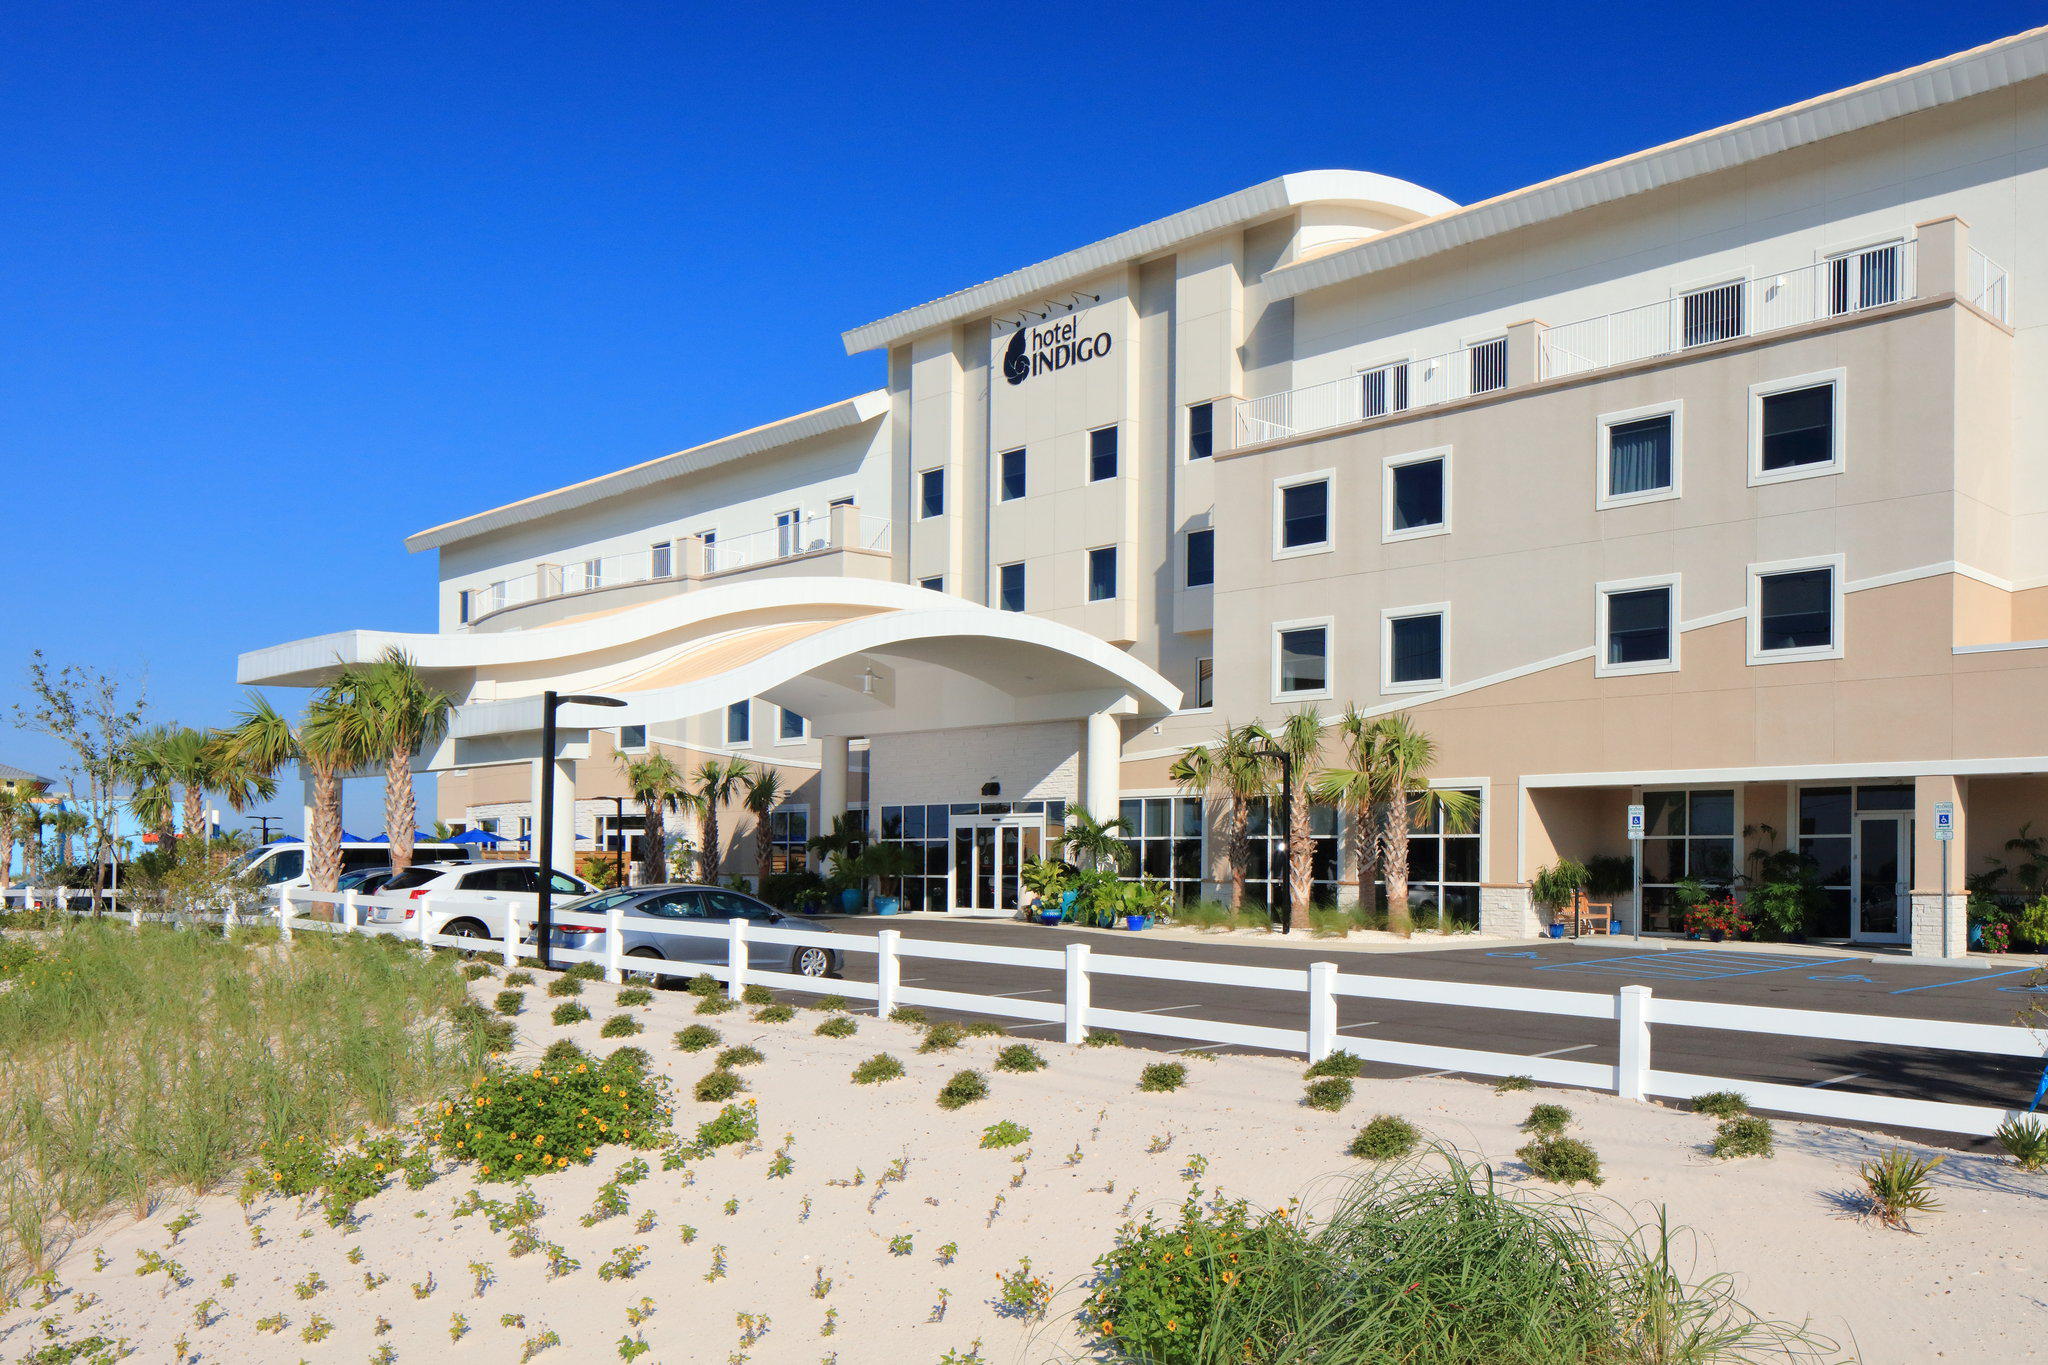 Hotel Indigo Orange Beach - Gulf Shores Photo